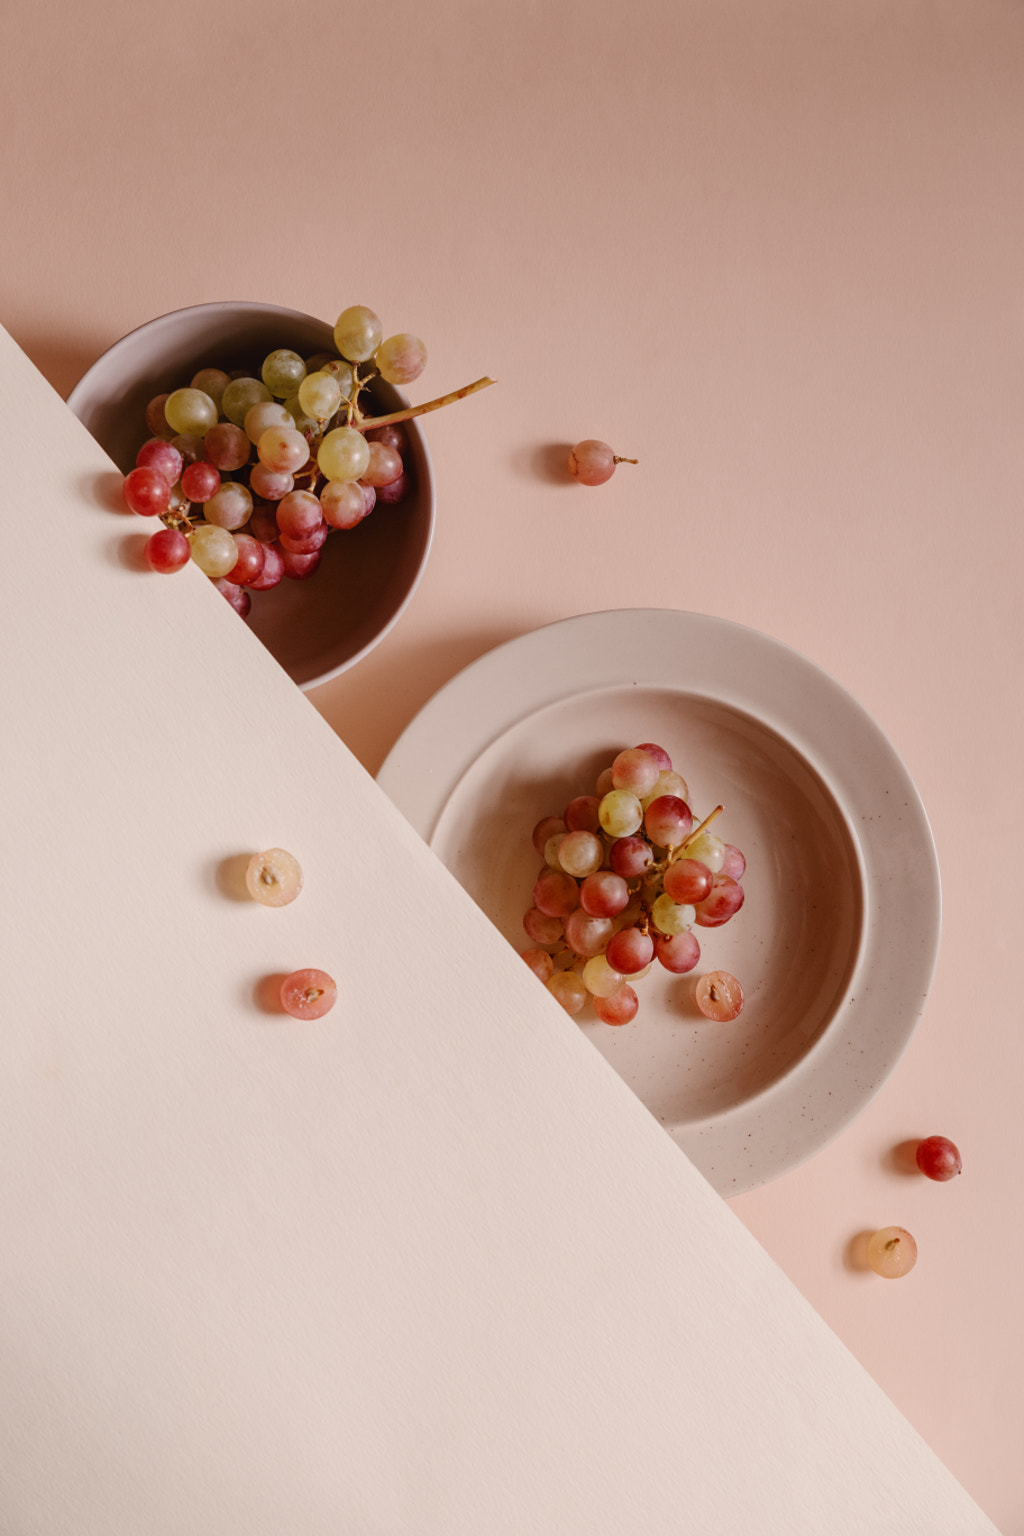 Grapes by Ada Davari on 500px.com